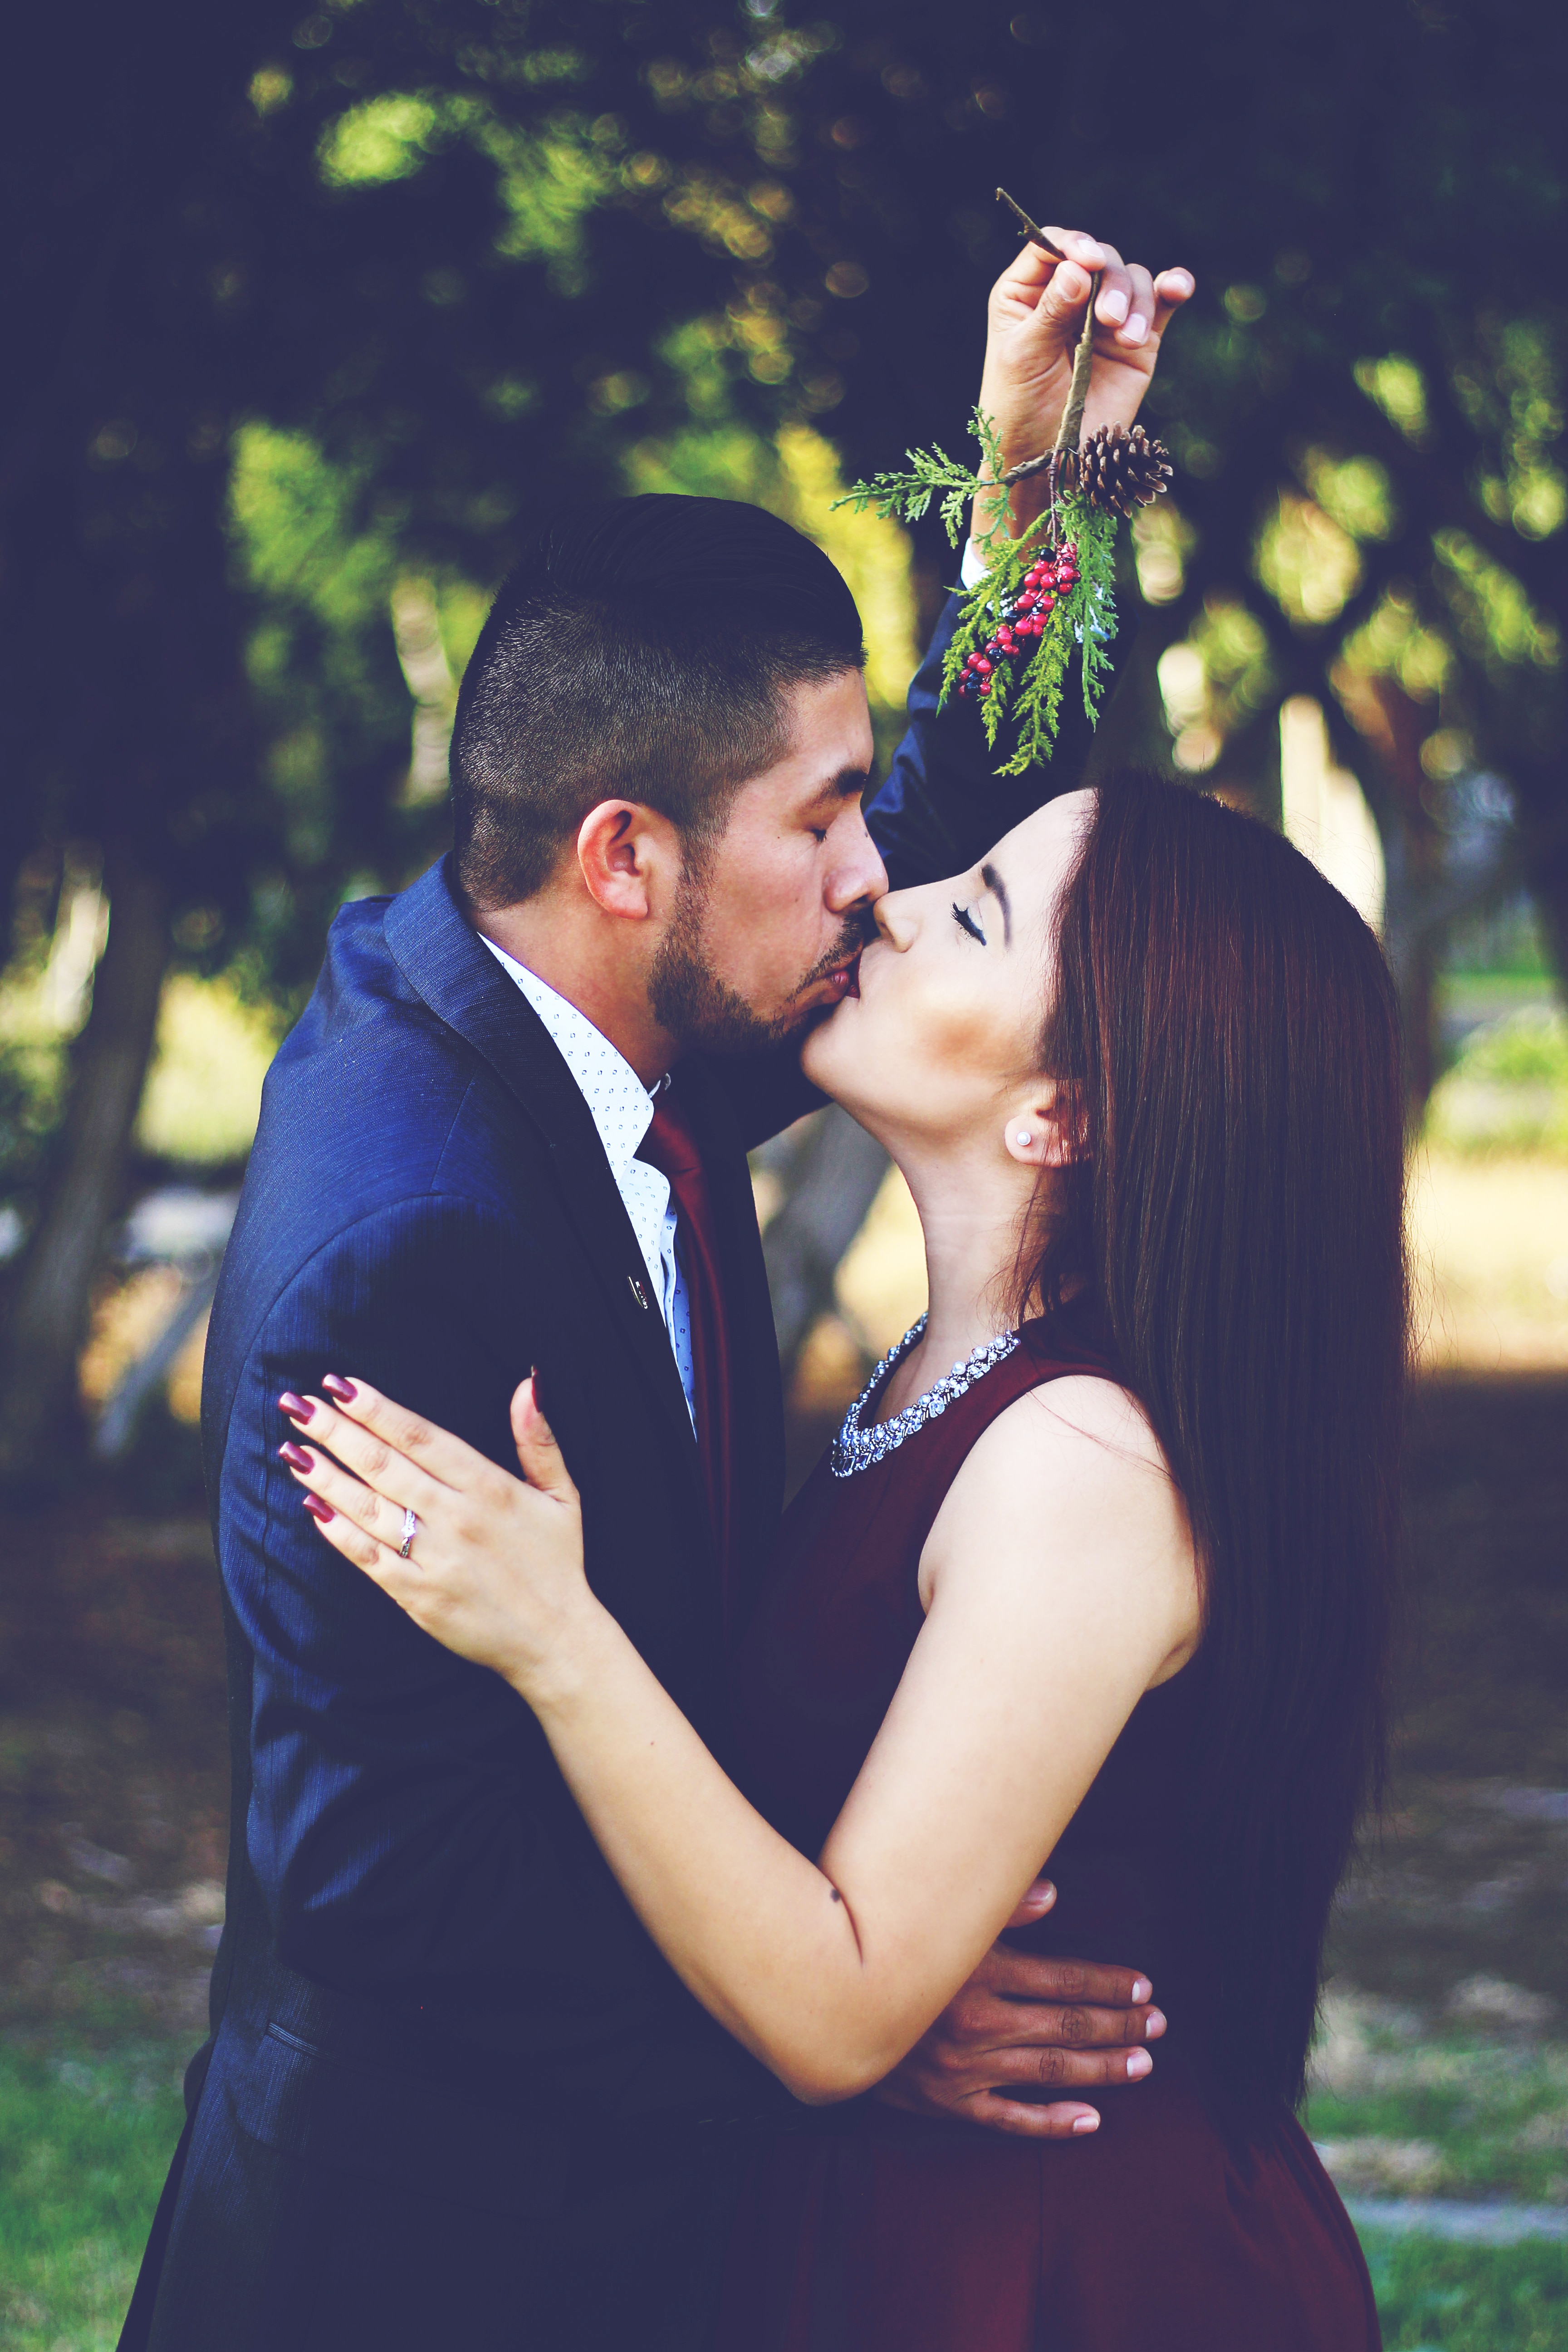 man holding mistletoe kissing woman